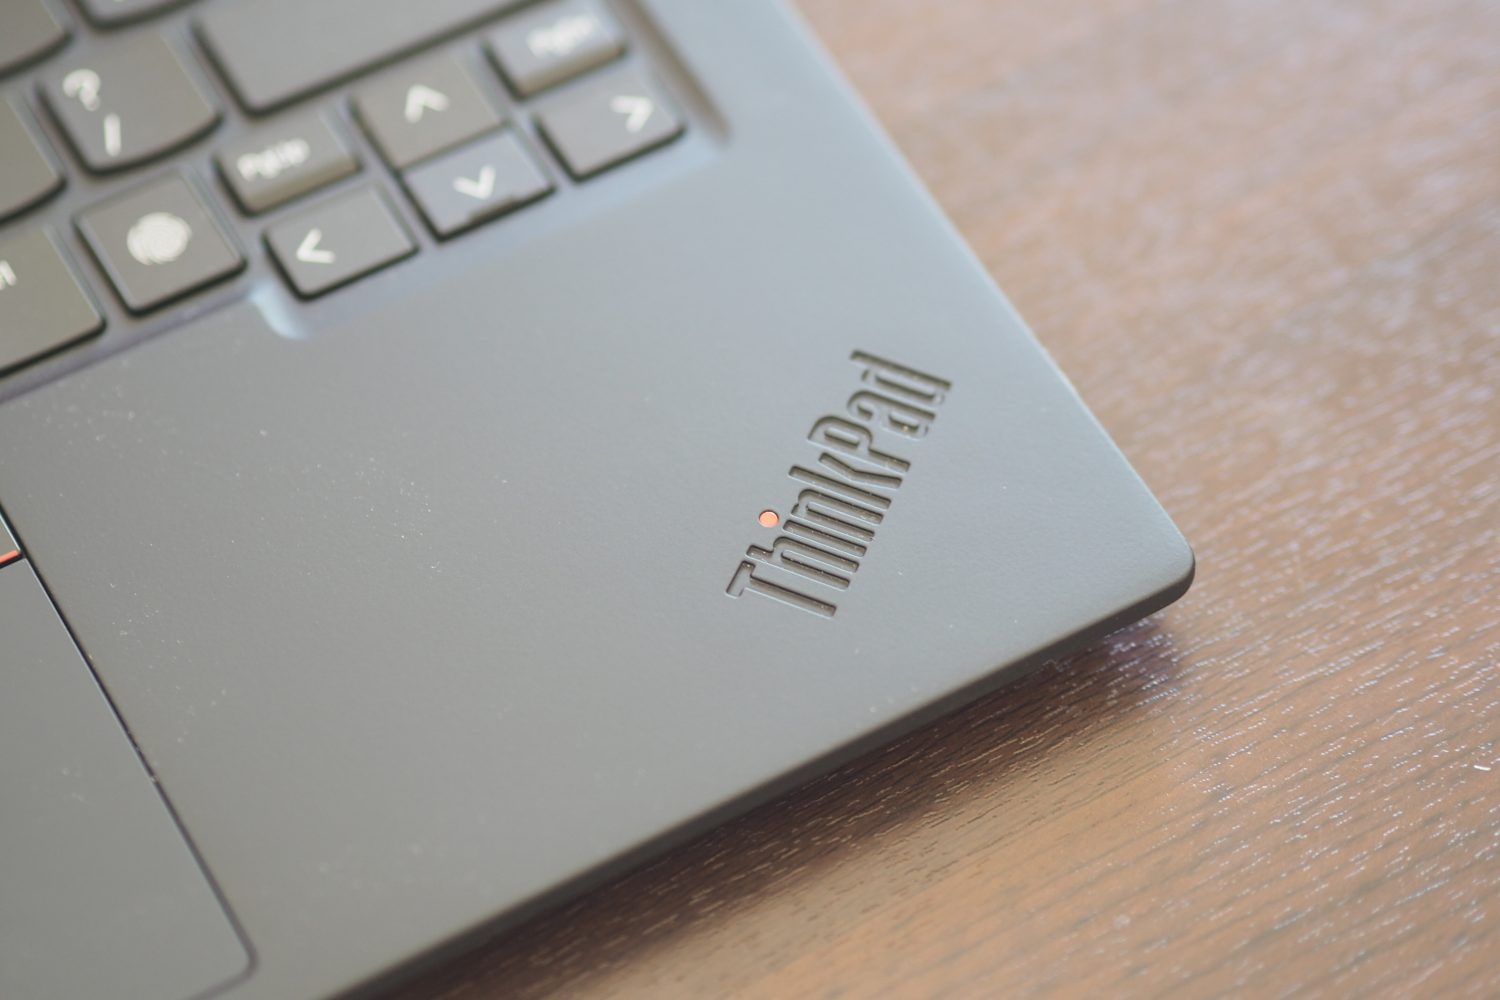 Lenovo ThinkPad X1 Carbon Gen 12 top down view showing logo.